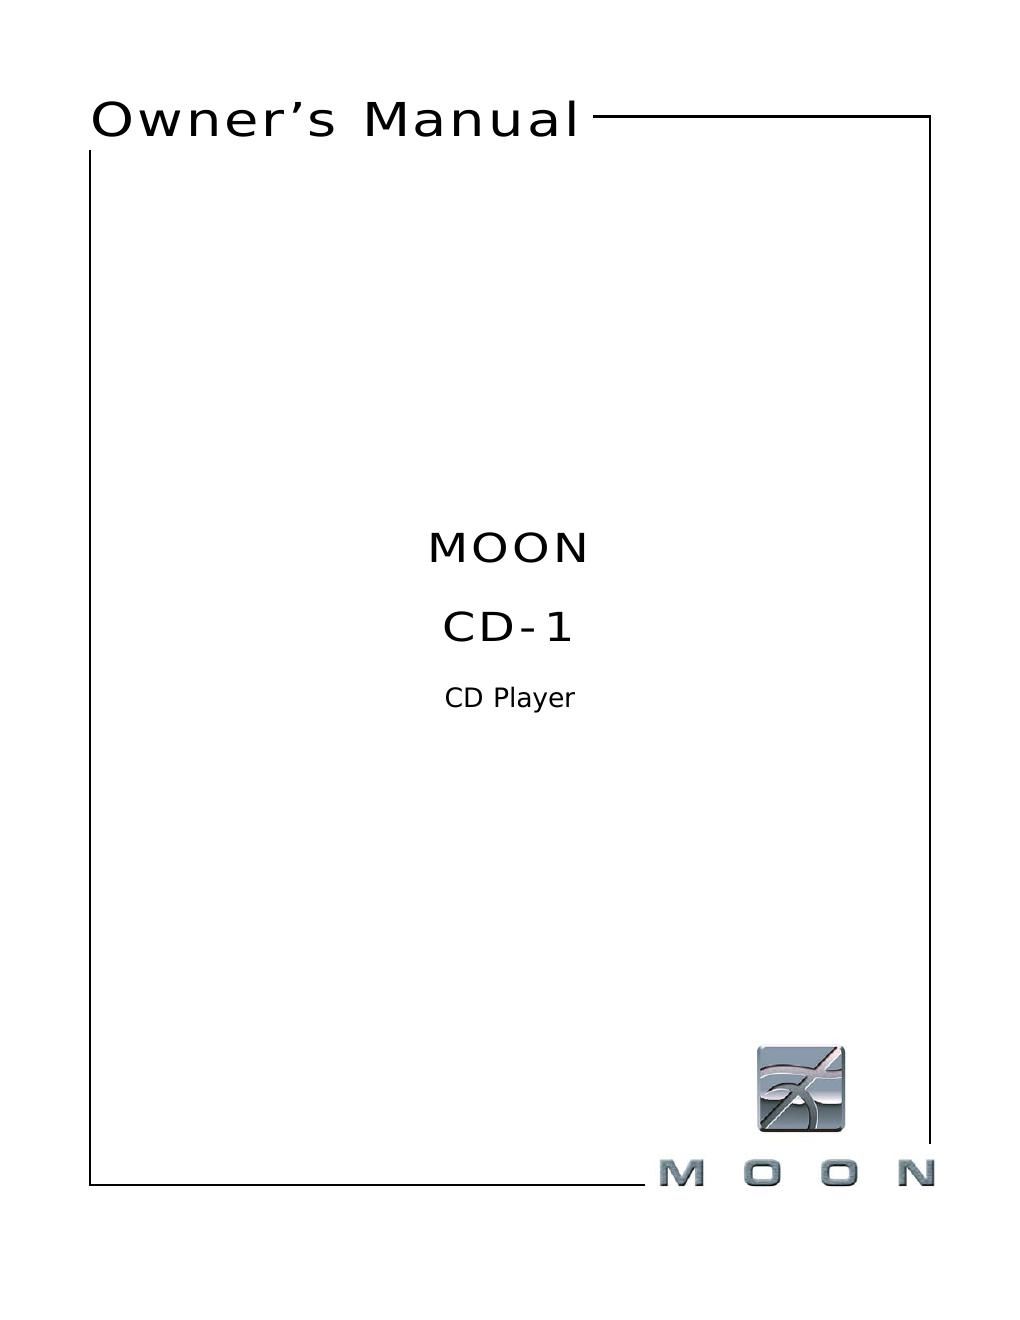 moon cd 1 owners manual